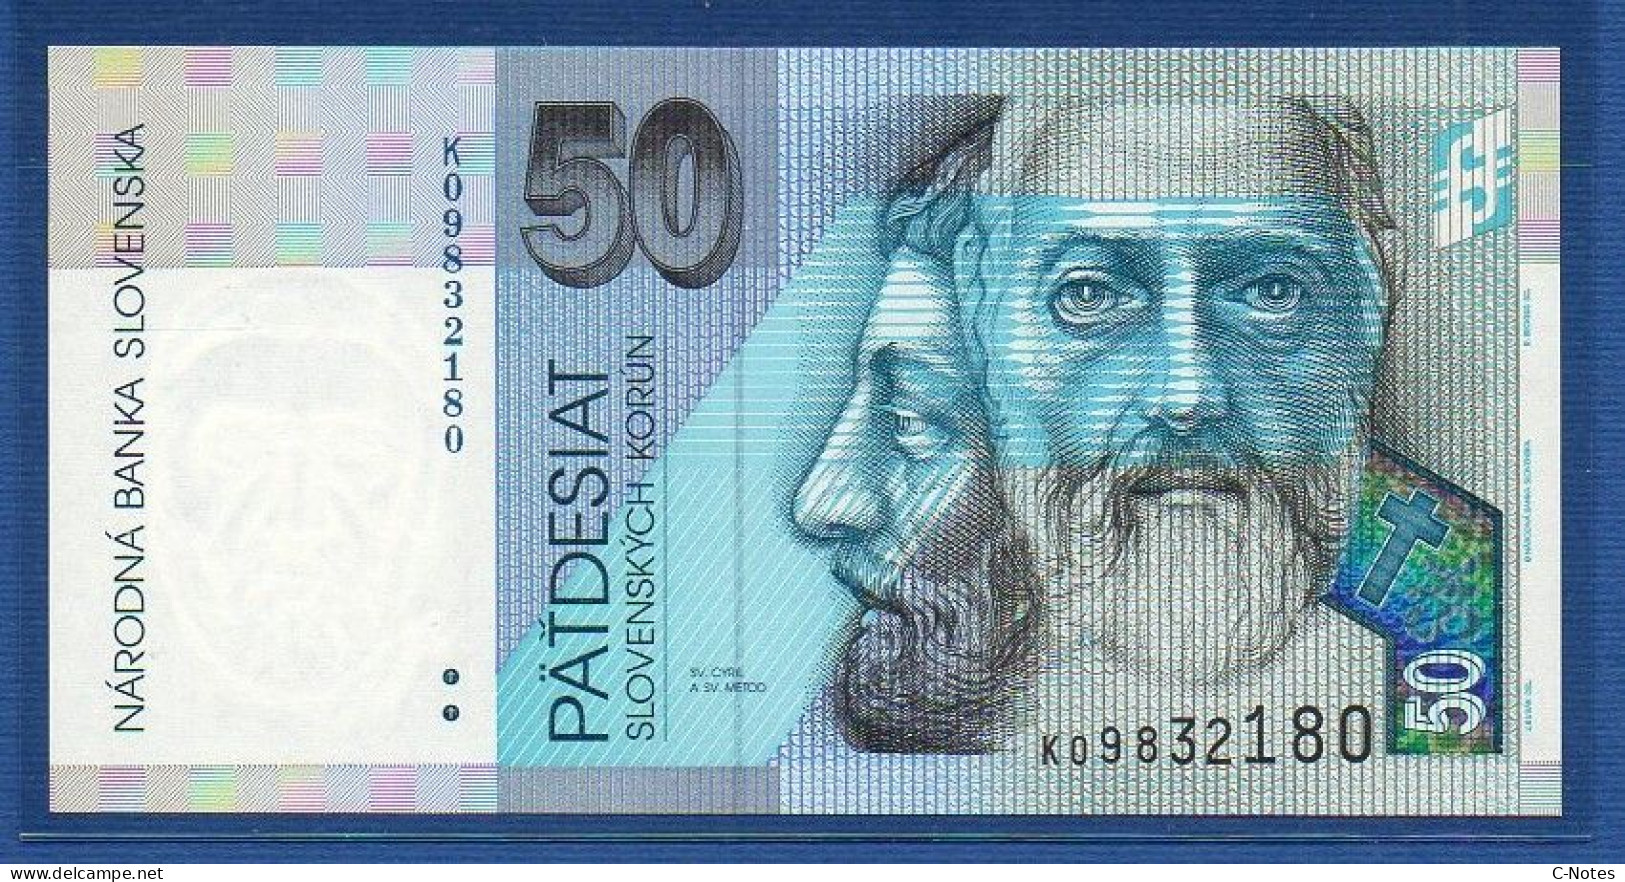 SLOVAKIA - P.21d – 50 Slovenských Korún 2002 UNC, S/n K09832180 - Slowakije